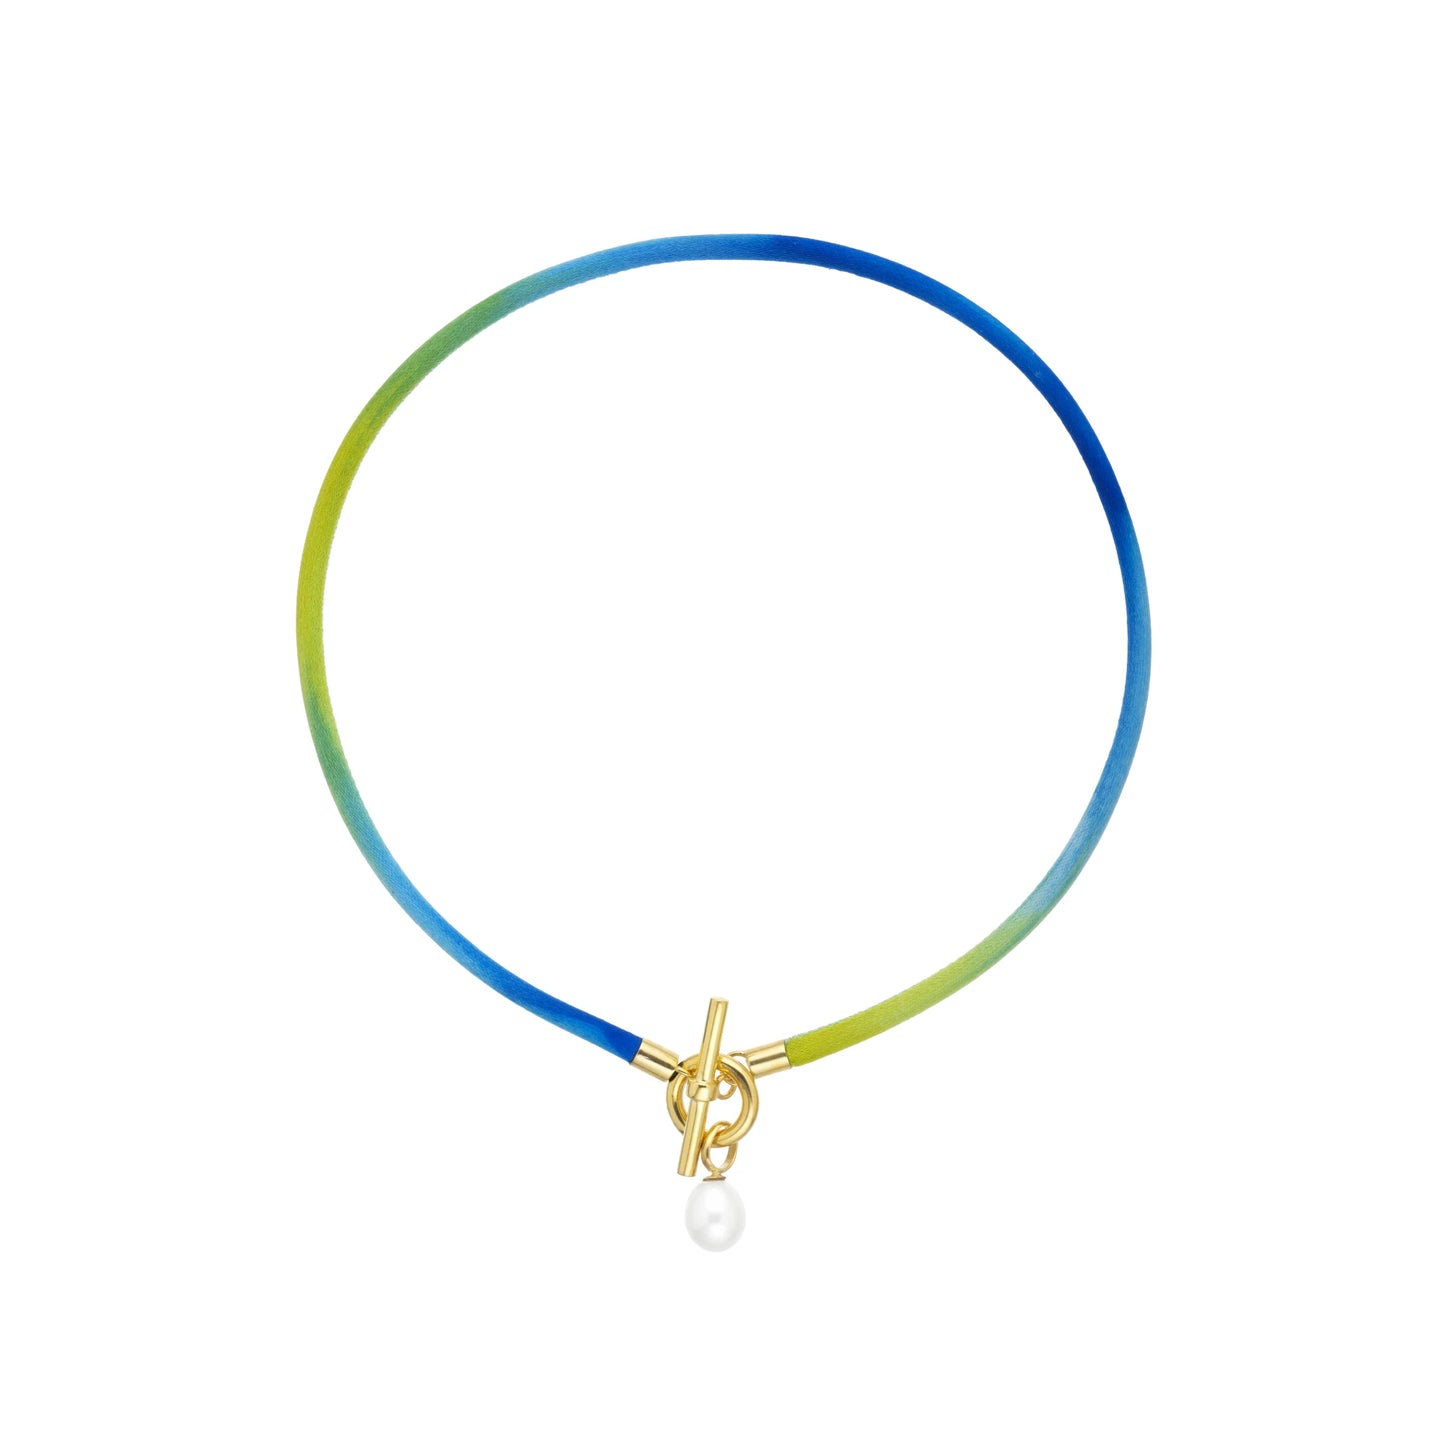 Hazy Pearl Collar Necklace - Green & 18kt Gold Vermeil